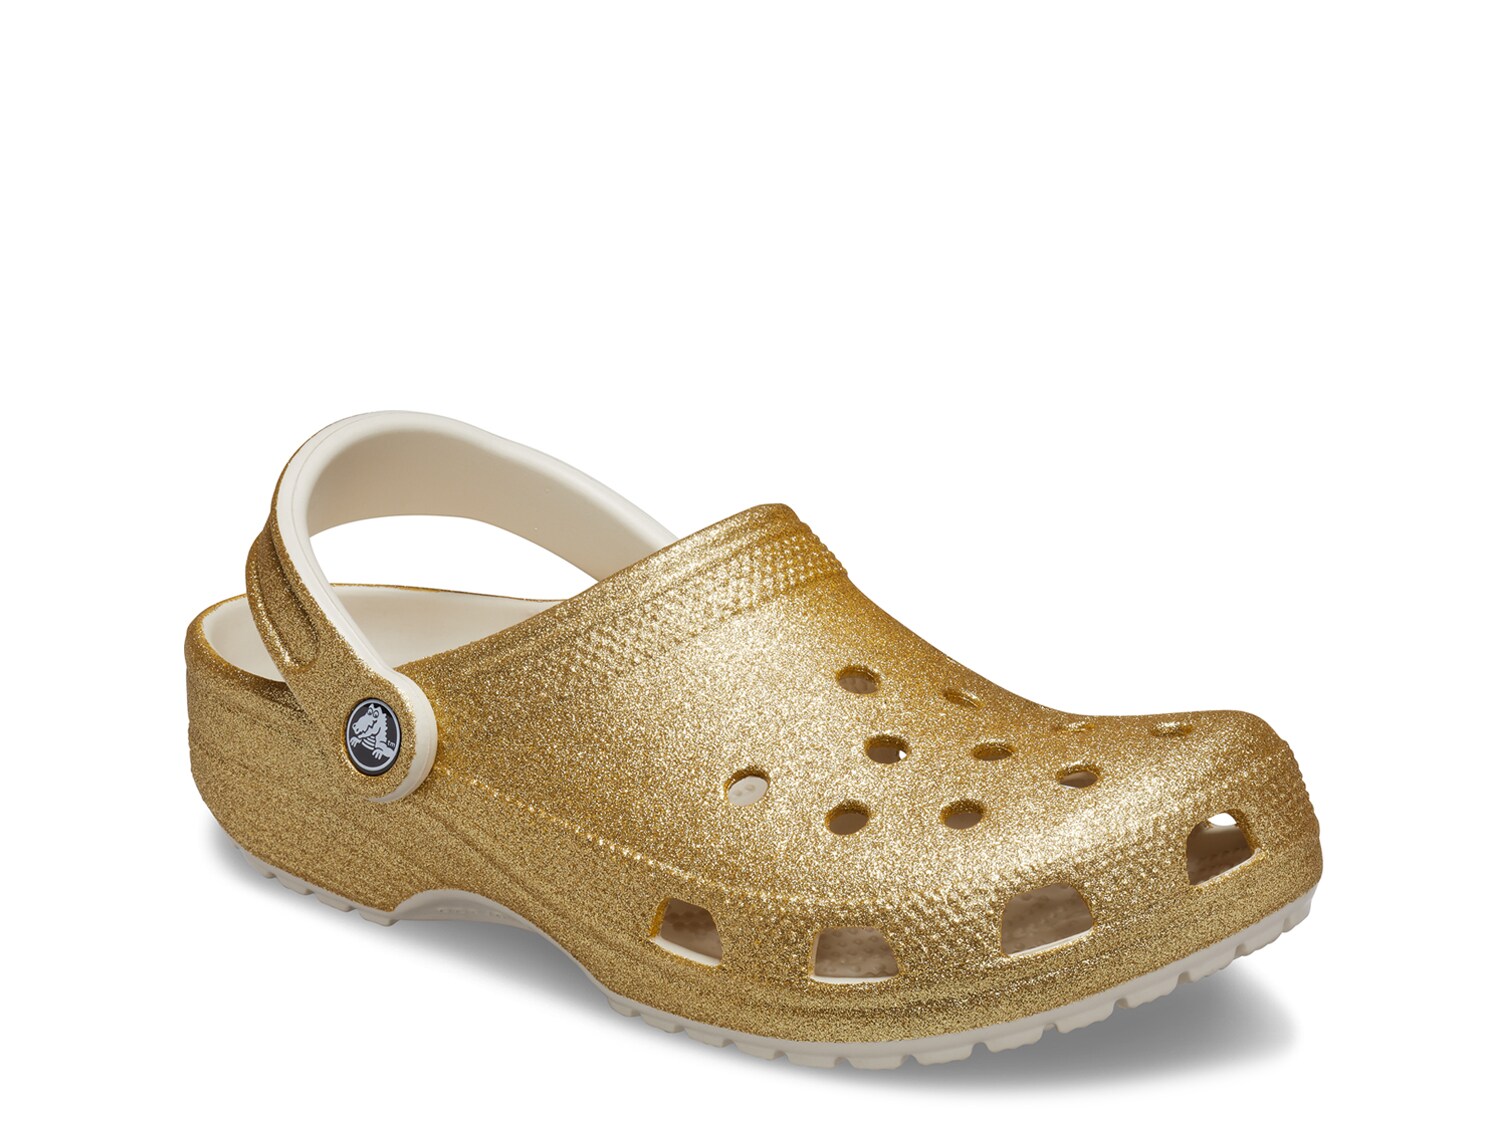 m12 crocs size